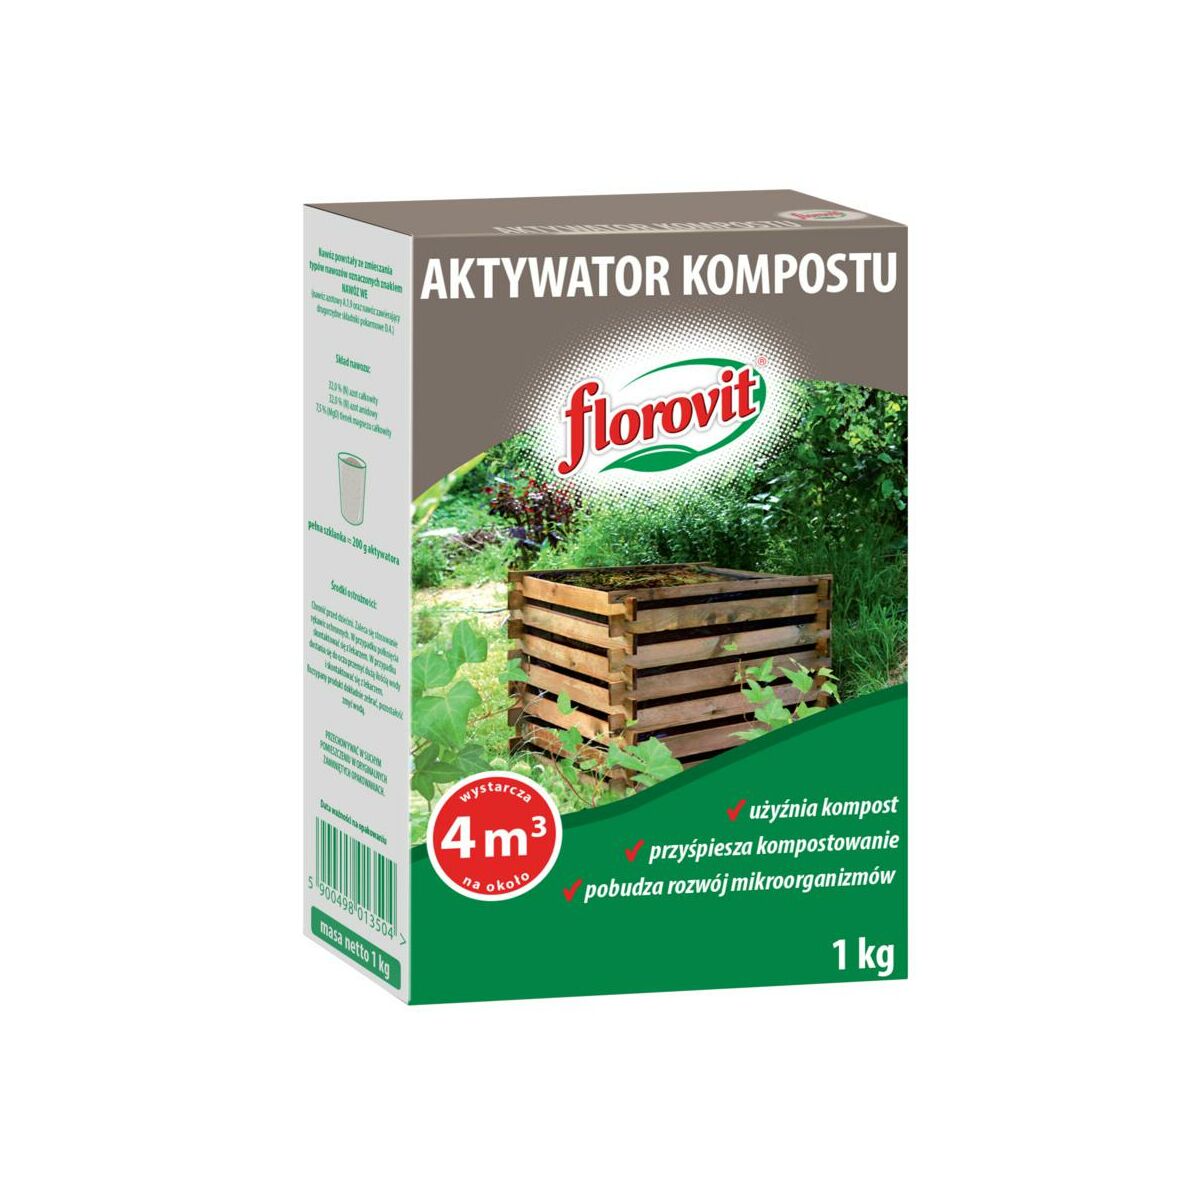 Aktywator kompostu 1kg Florovit